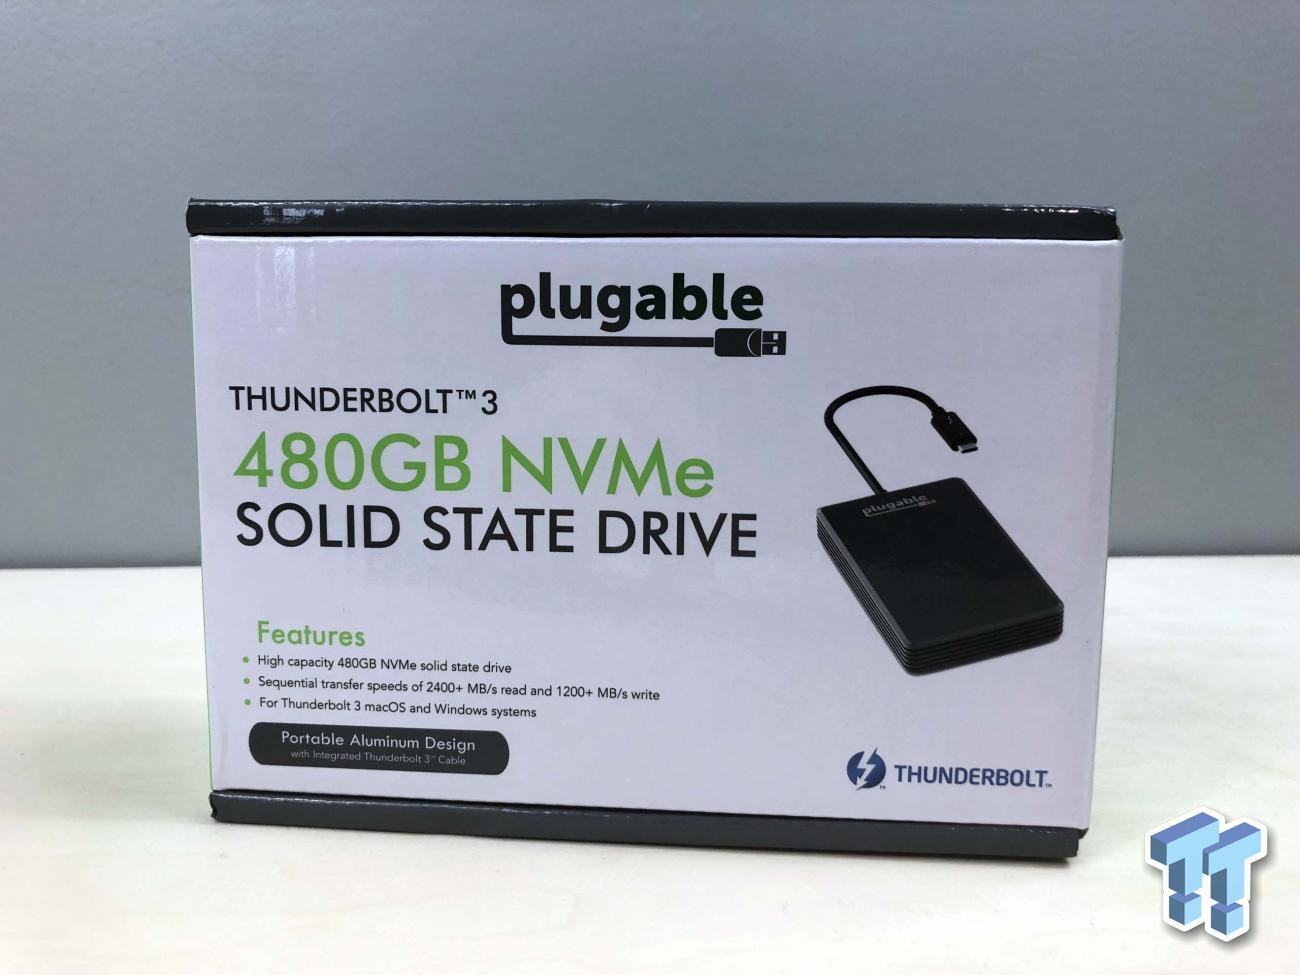 Plugable Thunderbolt 3 NVMe SSD Review